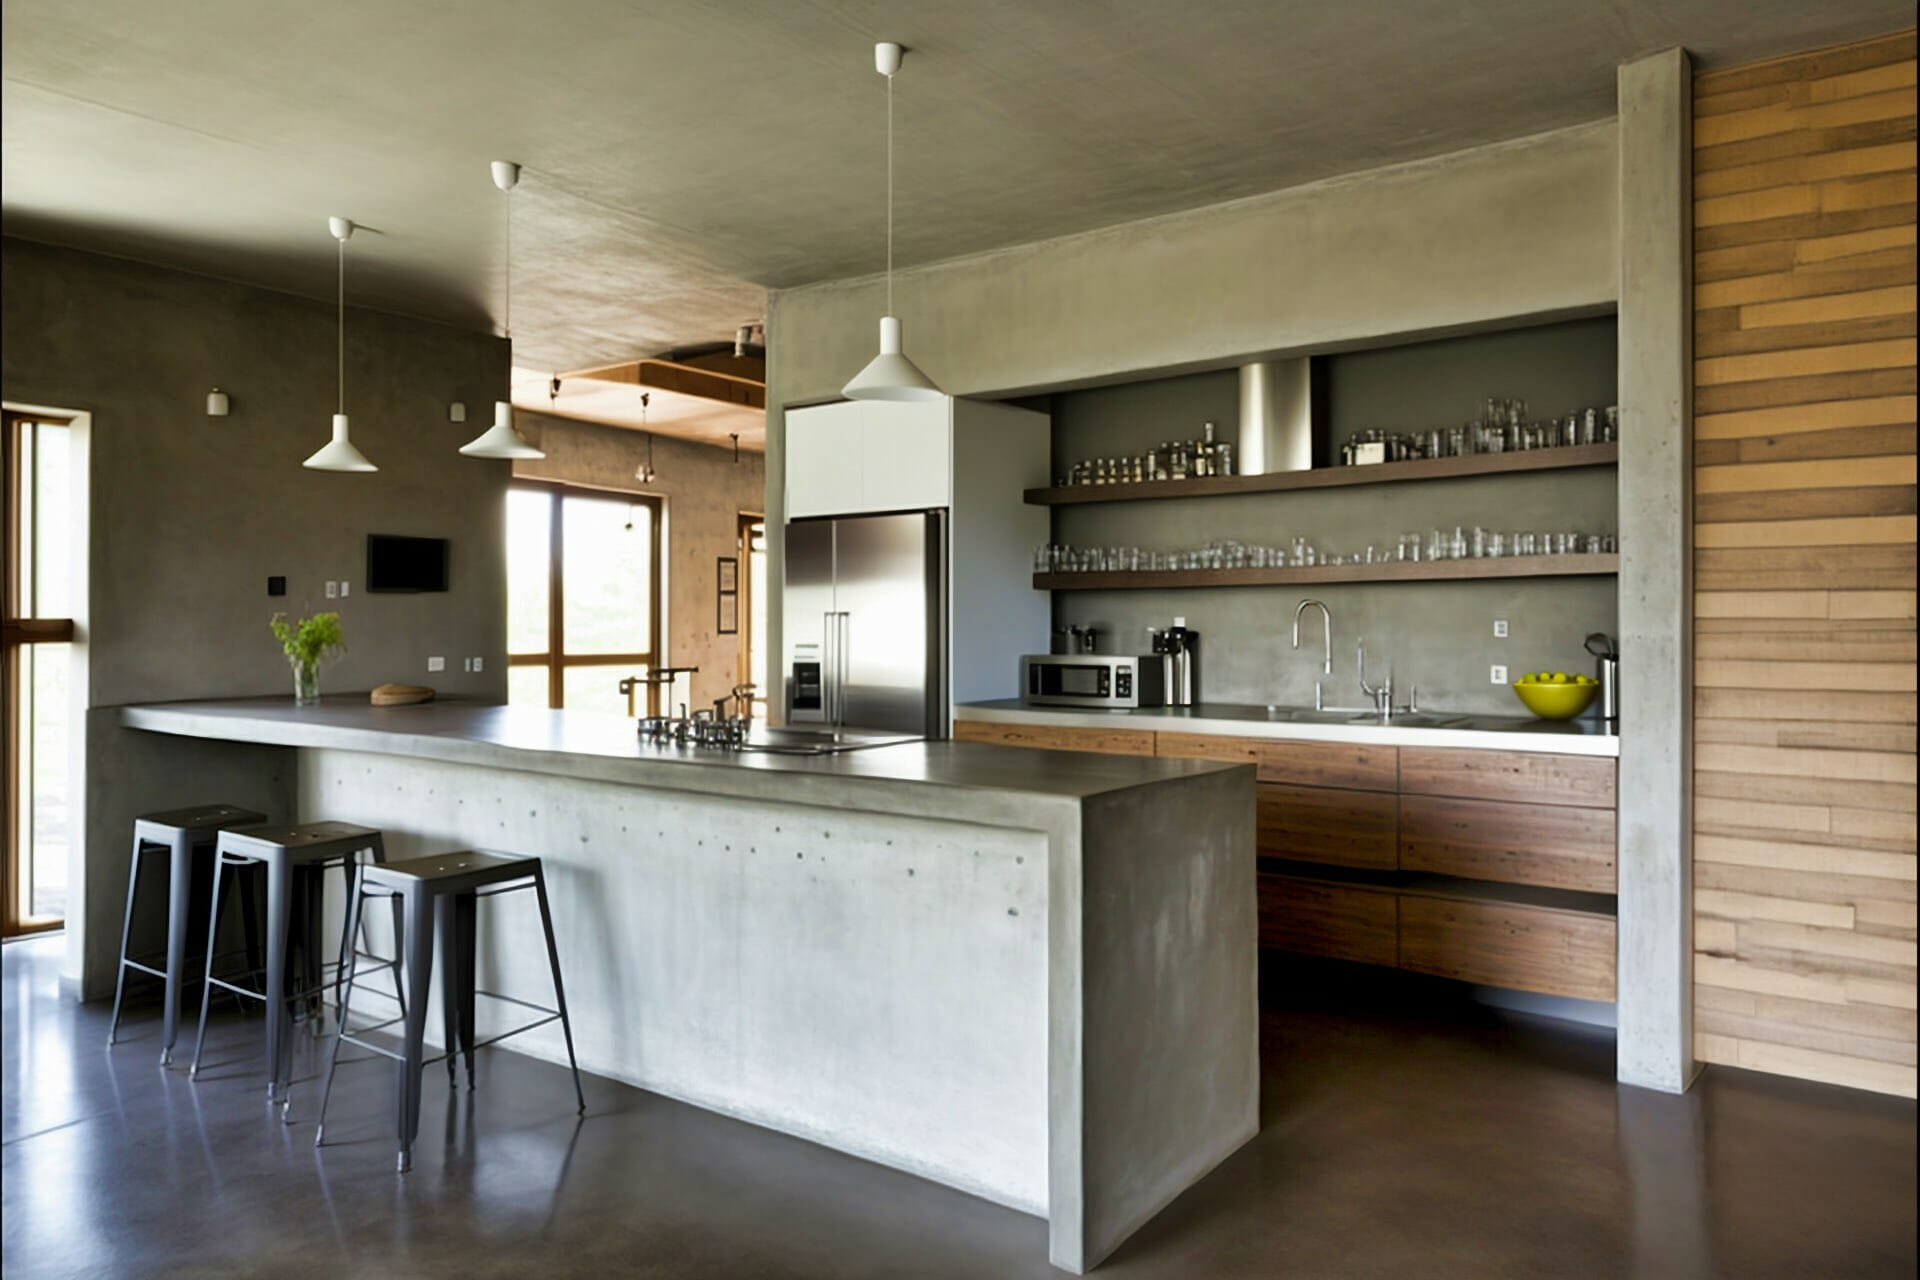 Natural Concrete A Modern Kitchen With A Gray Concrete